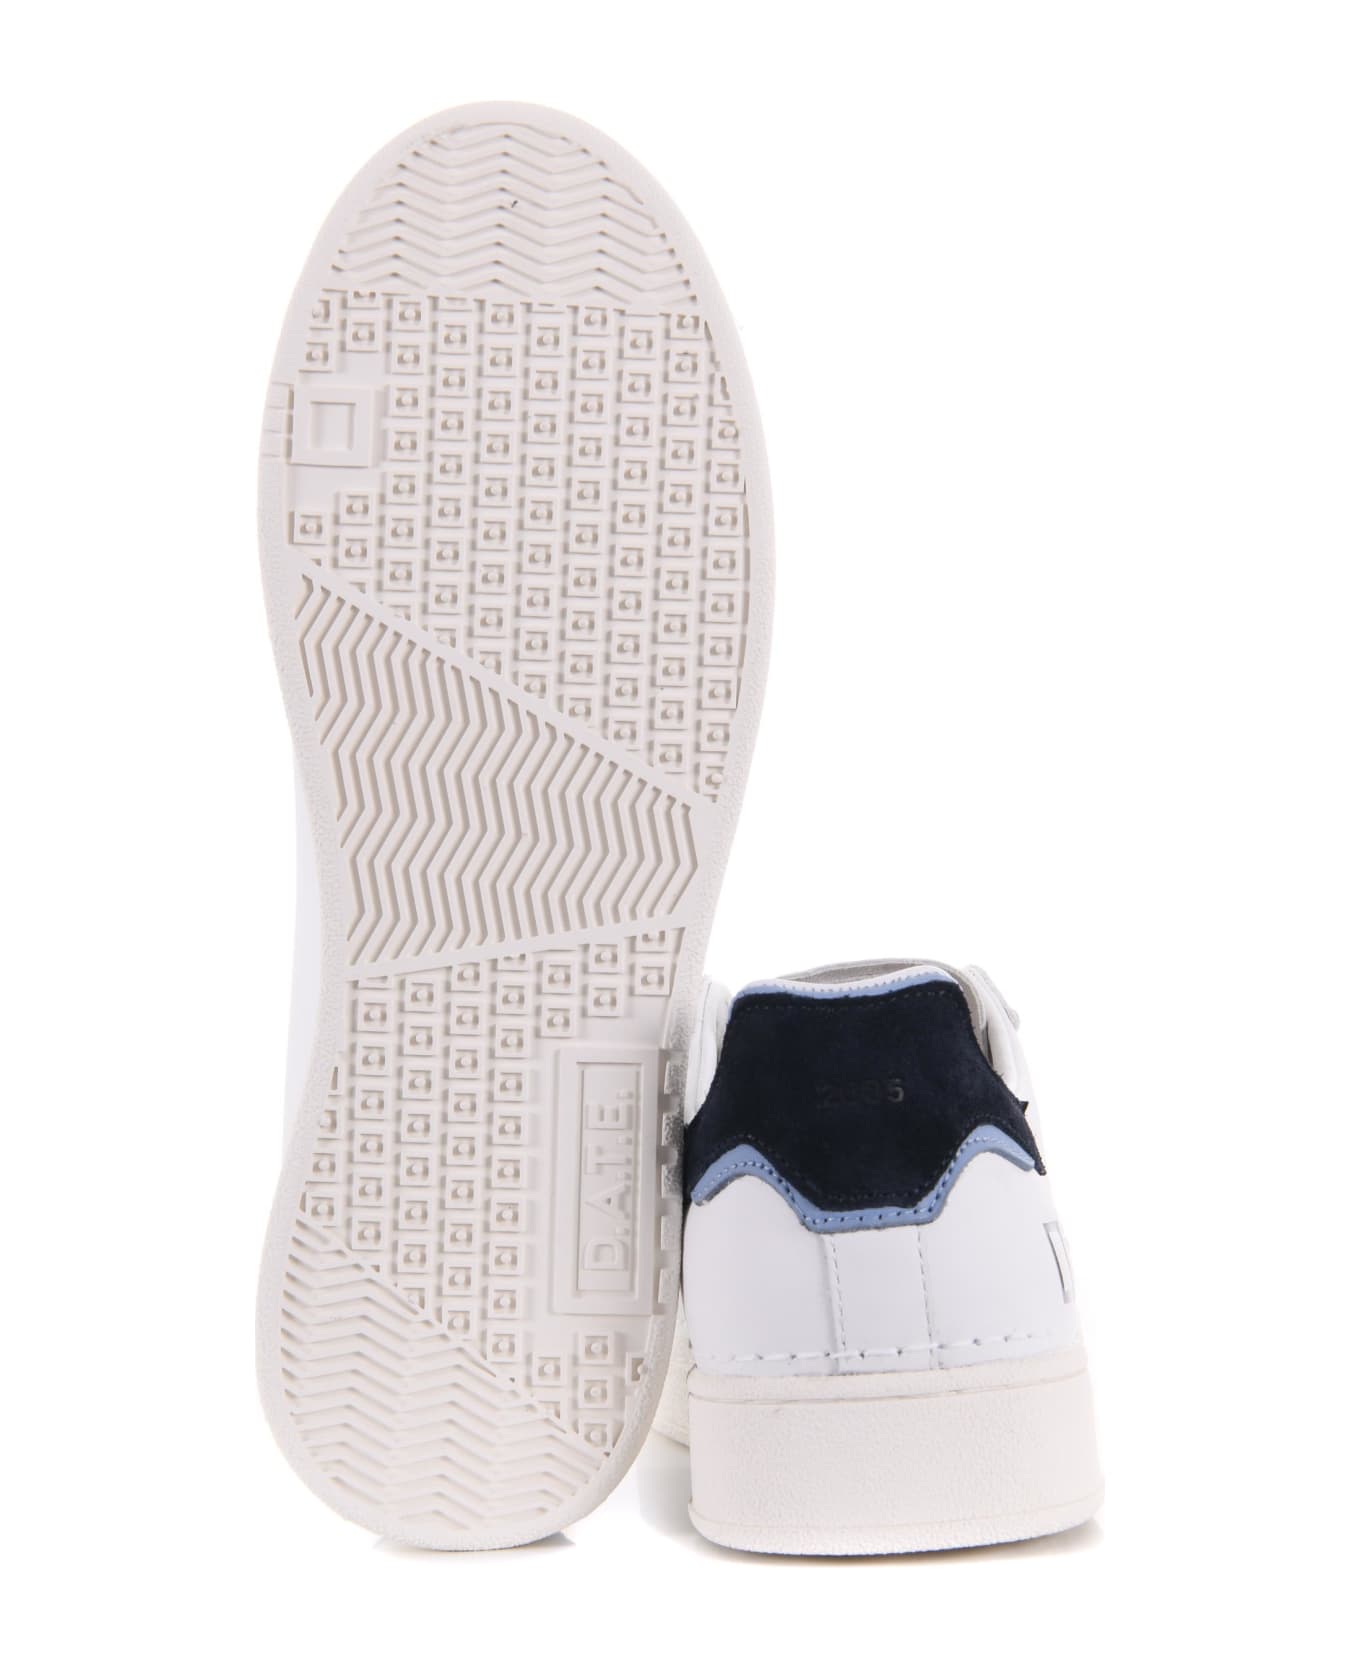 D.A.T.E. Men's Sneakers "base Calf" In Leather - Bianco/blu スニーカー